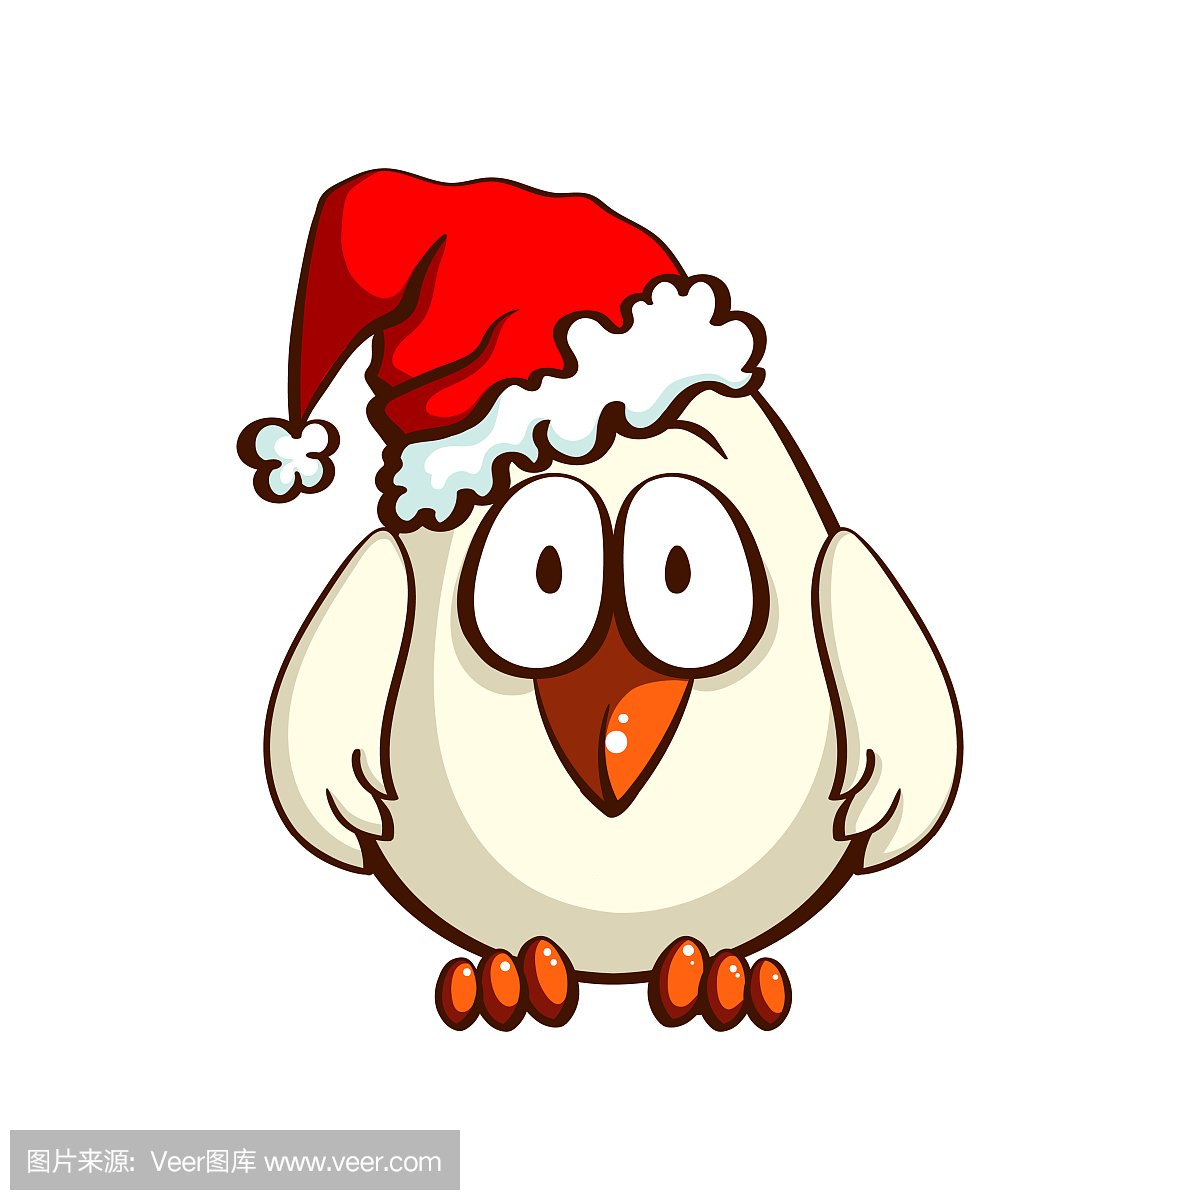 Chick_In_Santas_Hat